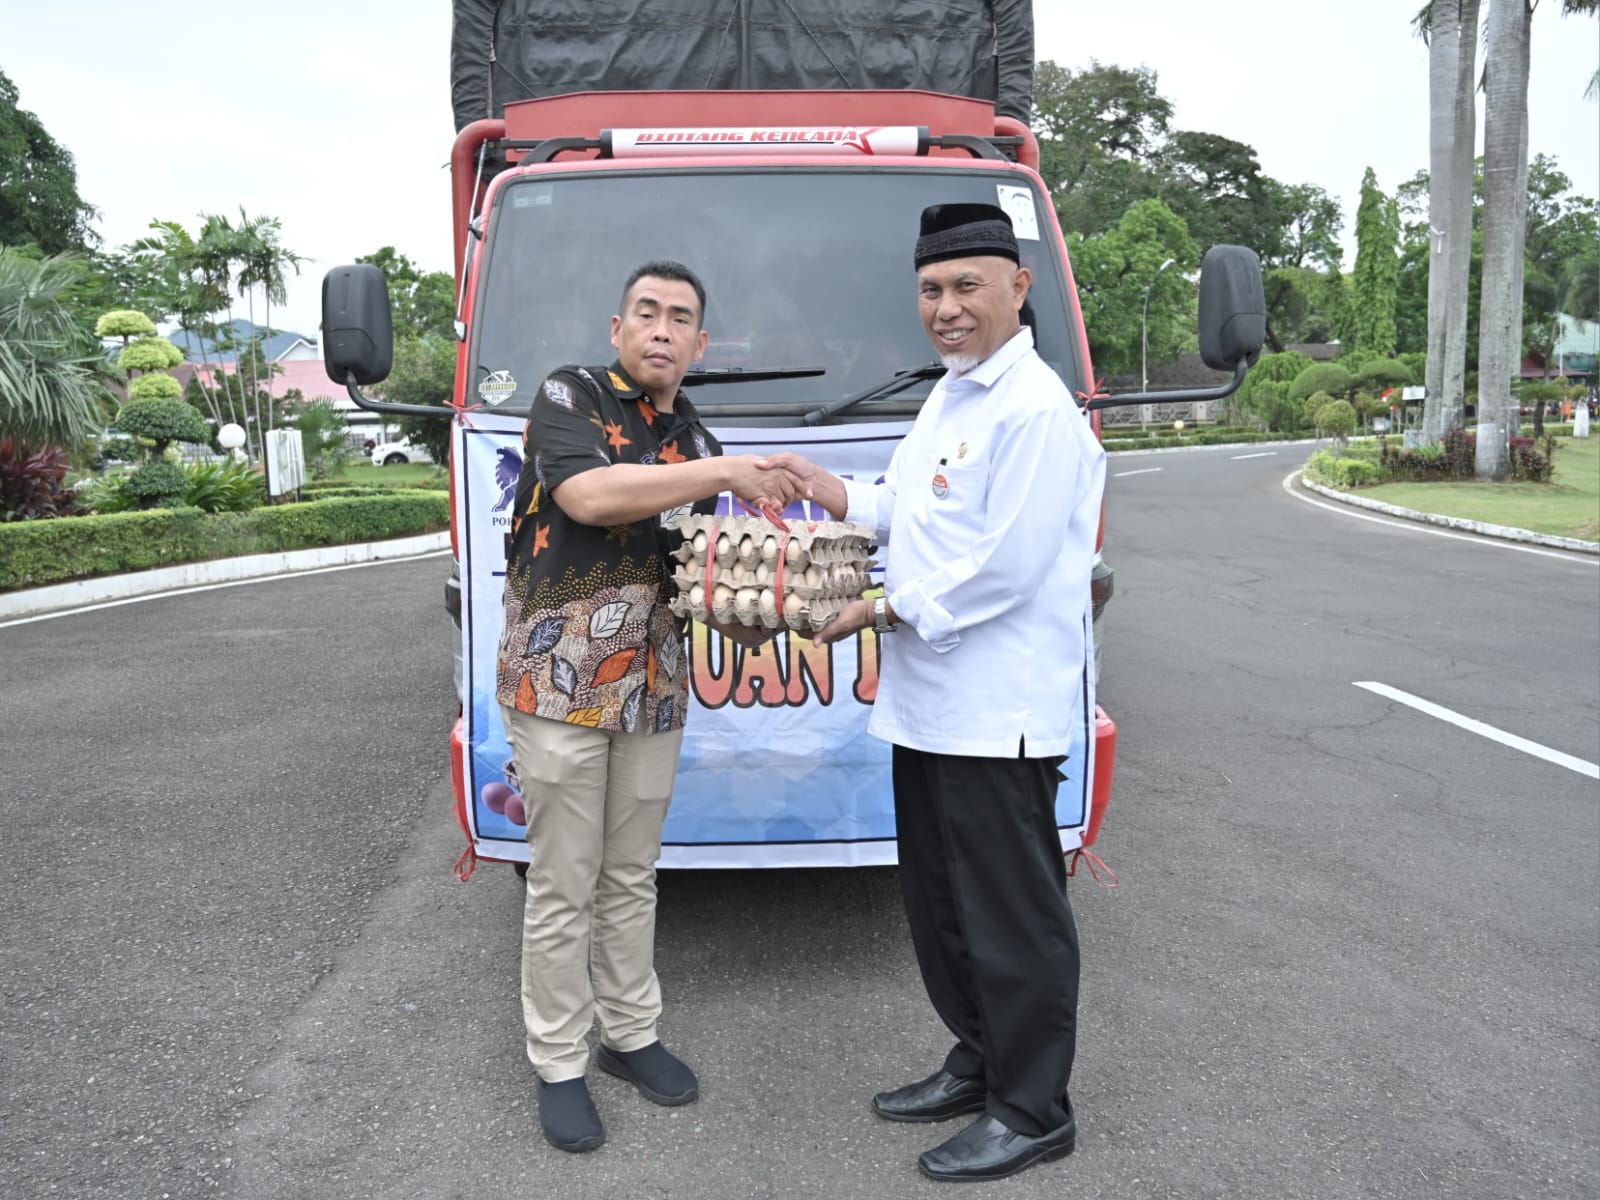 Gubernur Sumatera Barat Mahyeldi, menerima bantuan 50 ribu butir telur dari PT Charoen Pokphand Indonesia, yang kemudian akan disalurkan kepada masyarakat terdampak bencana banjir dan longsor di Sumbar. Foto Adpsb. 